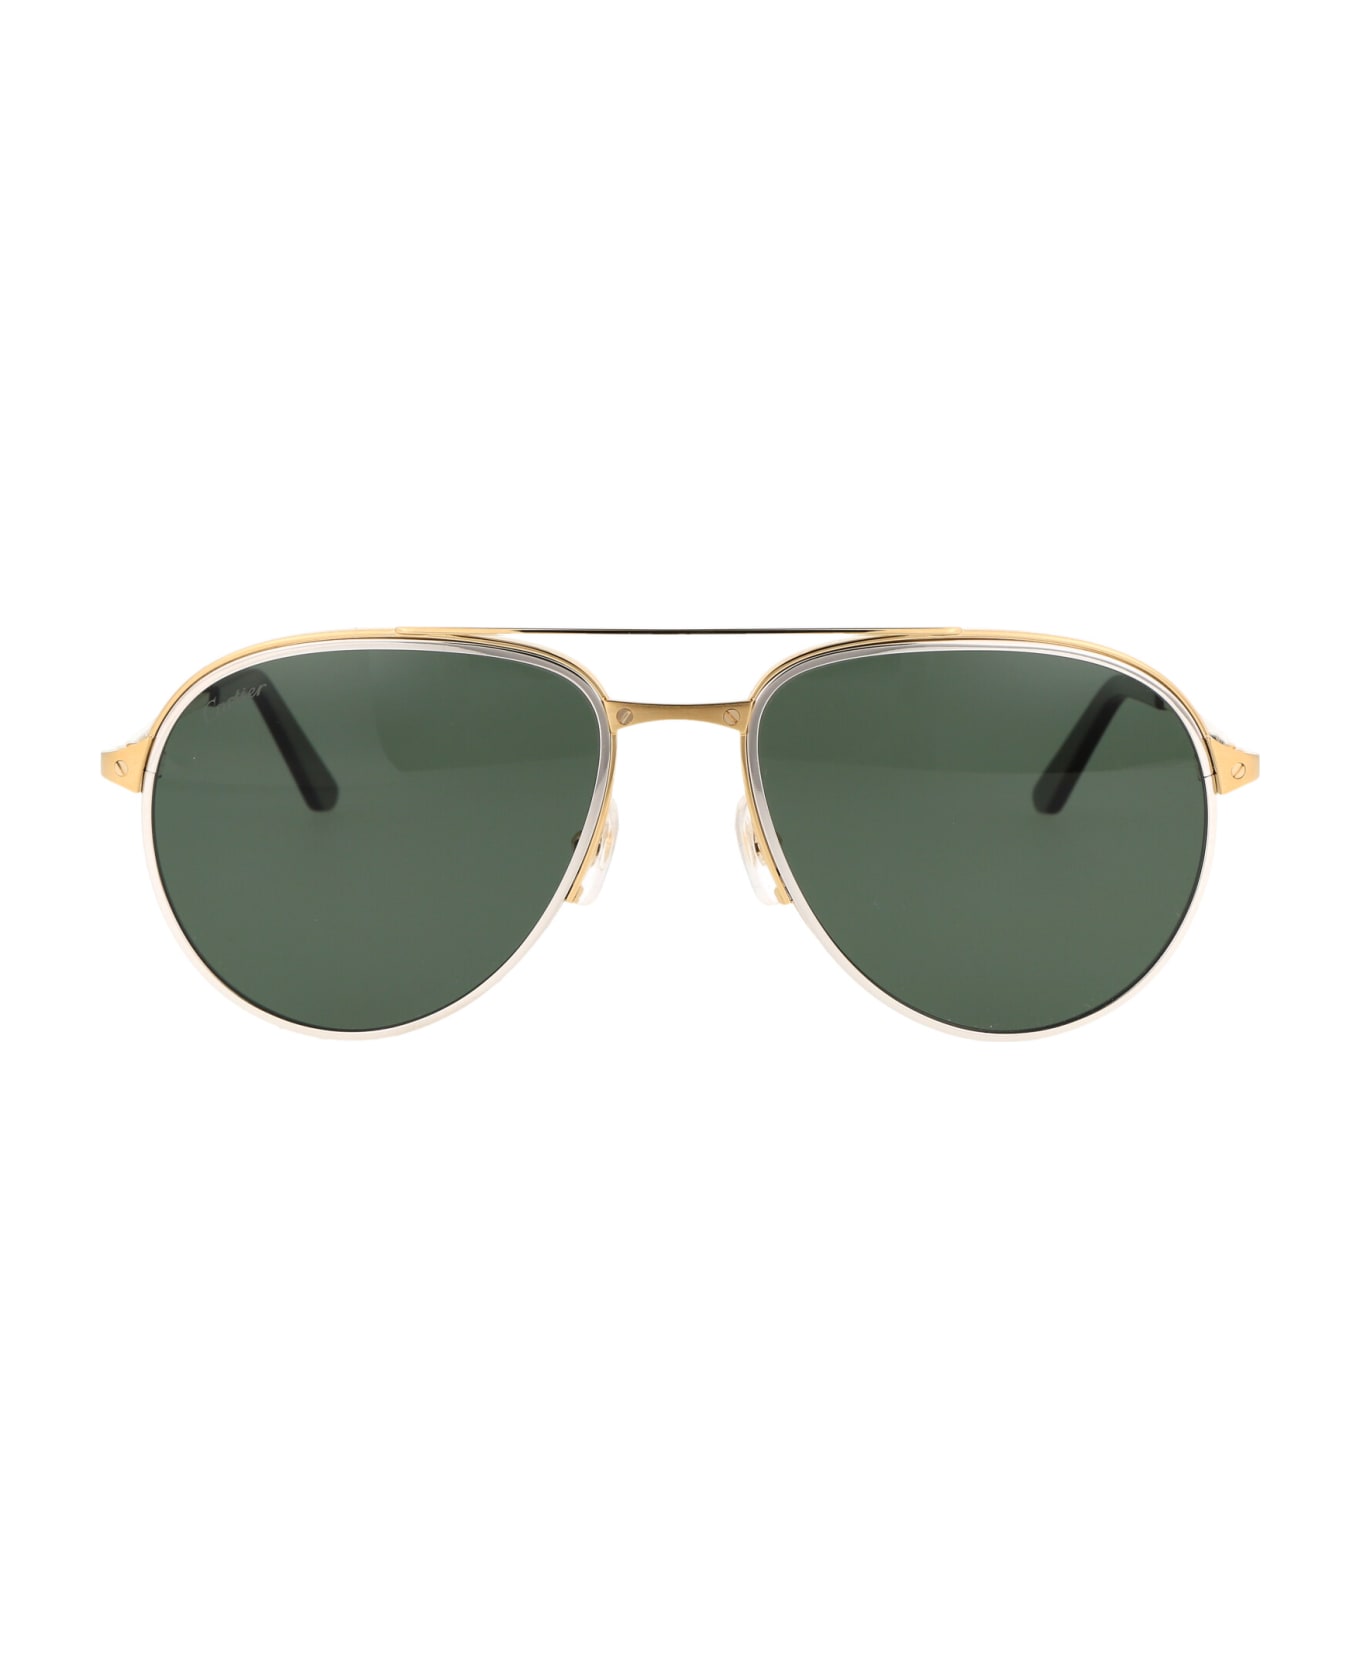 Cartier Eyewear Ct0325s Sunglasses - 006 GOLD GOLD GREEN サングラス